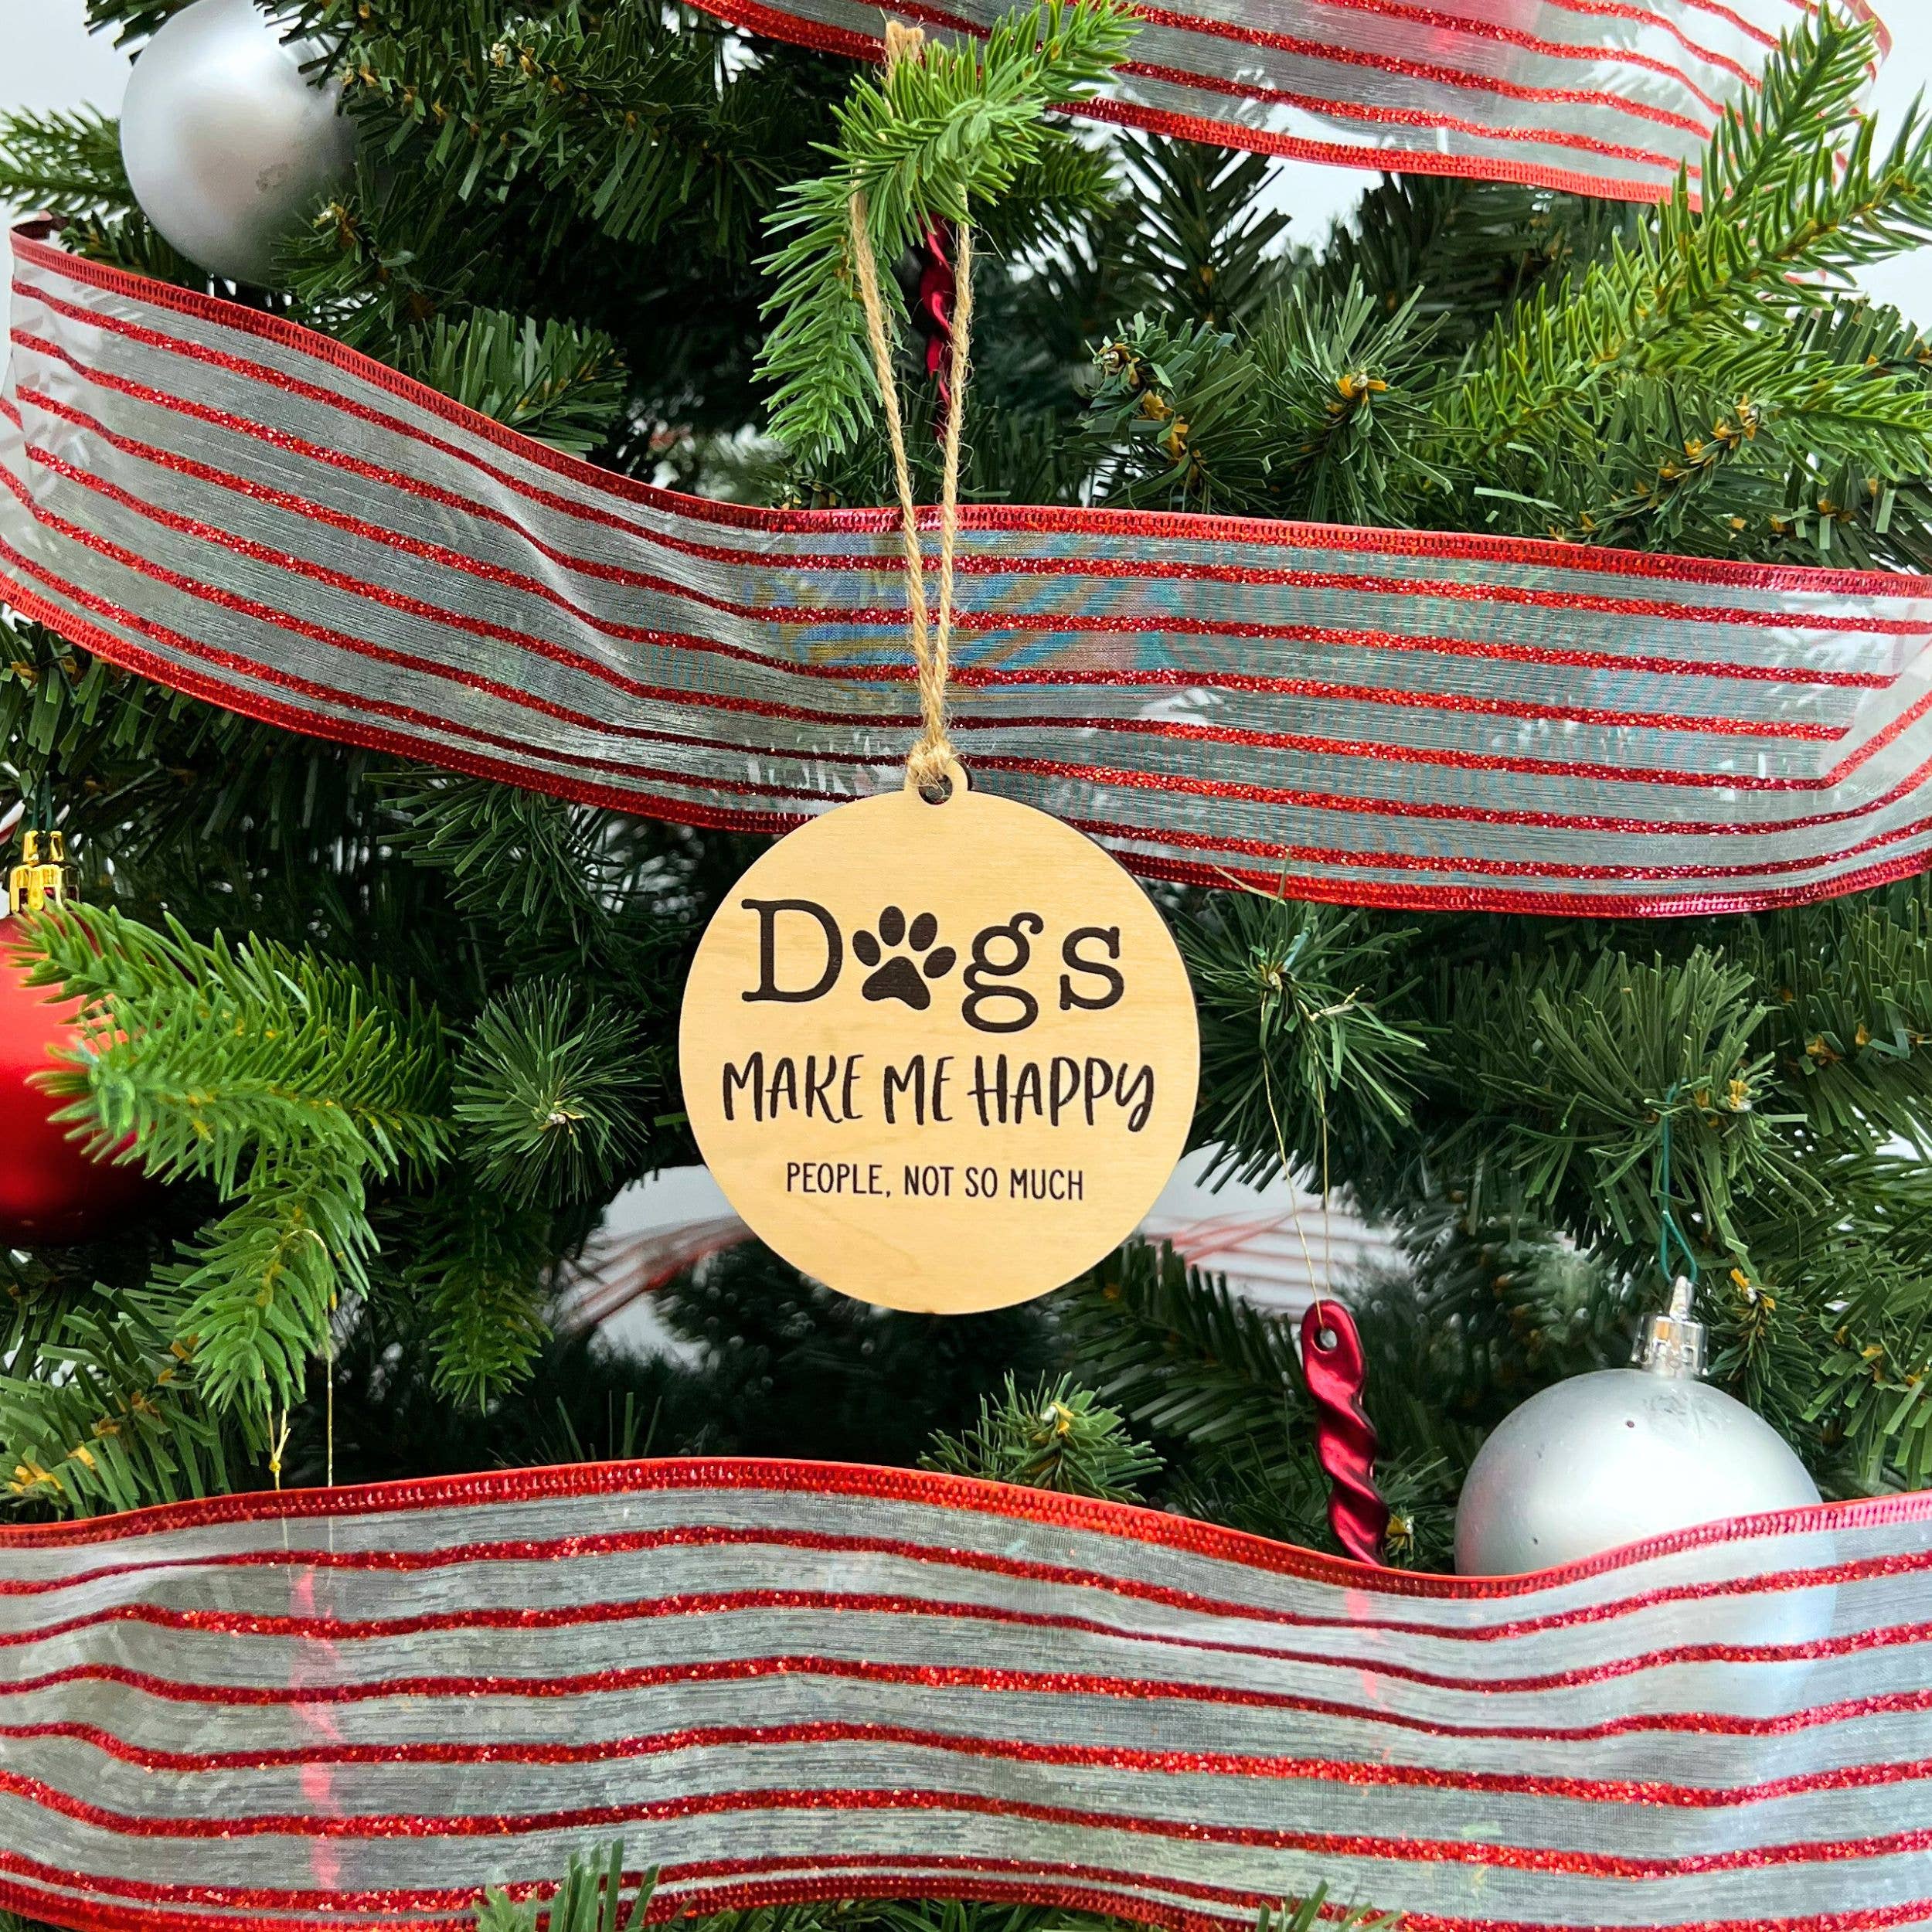 Dogs Make Me Christmas Ornaments - Christmas Décor - Clearance